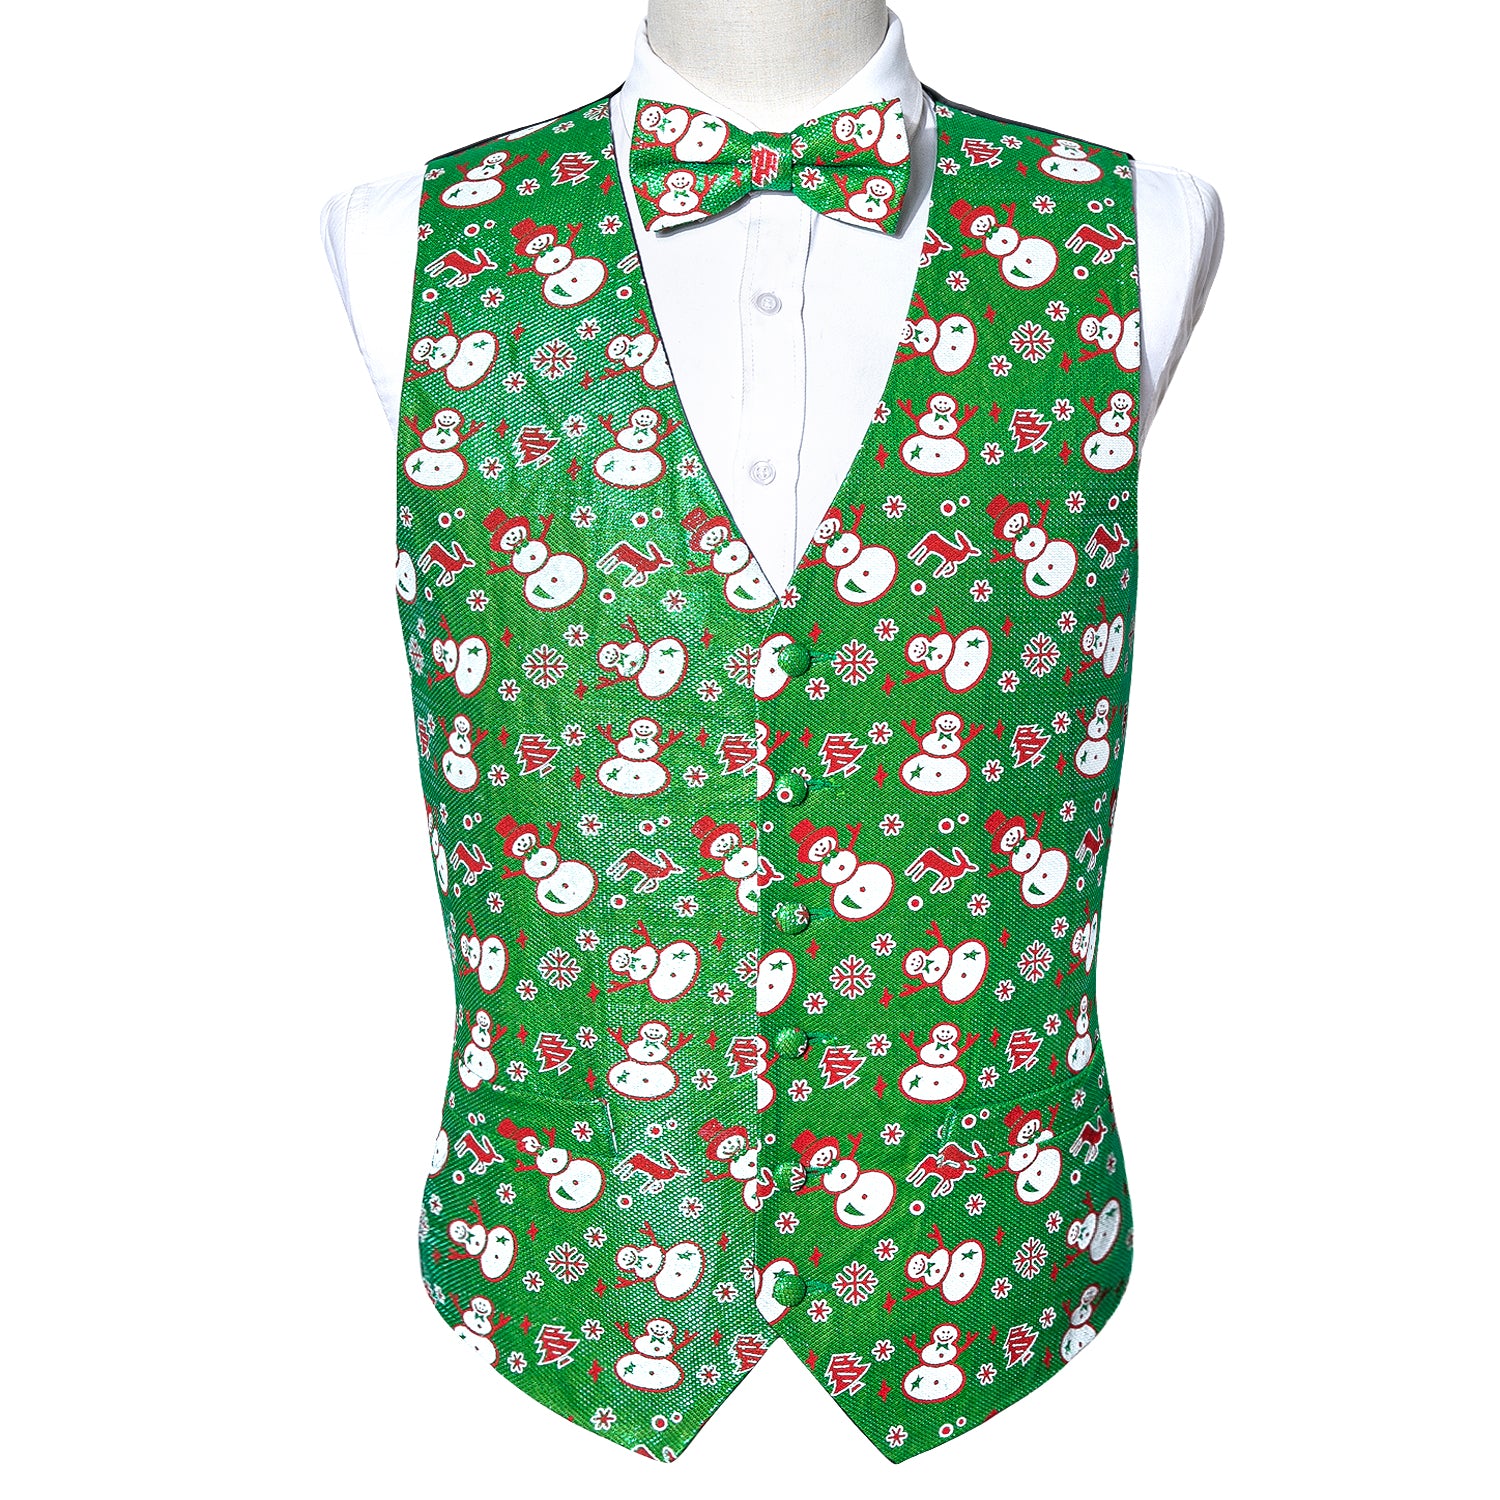 Barry.wang Christmas Vest Men's Novelty Green White Snowman Silk Vest Green Bowtie Set